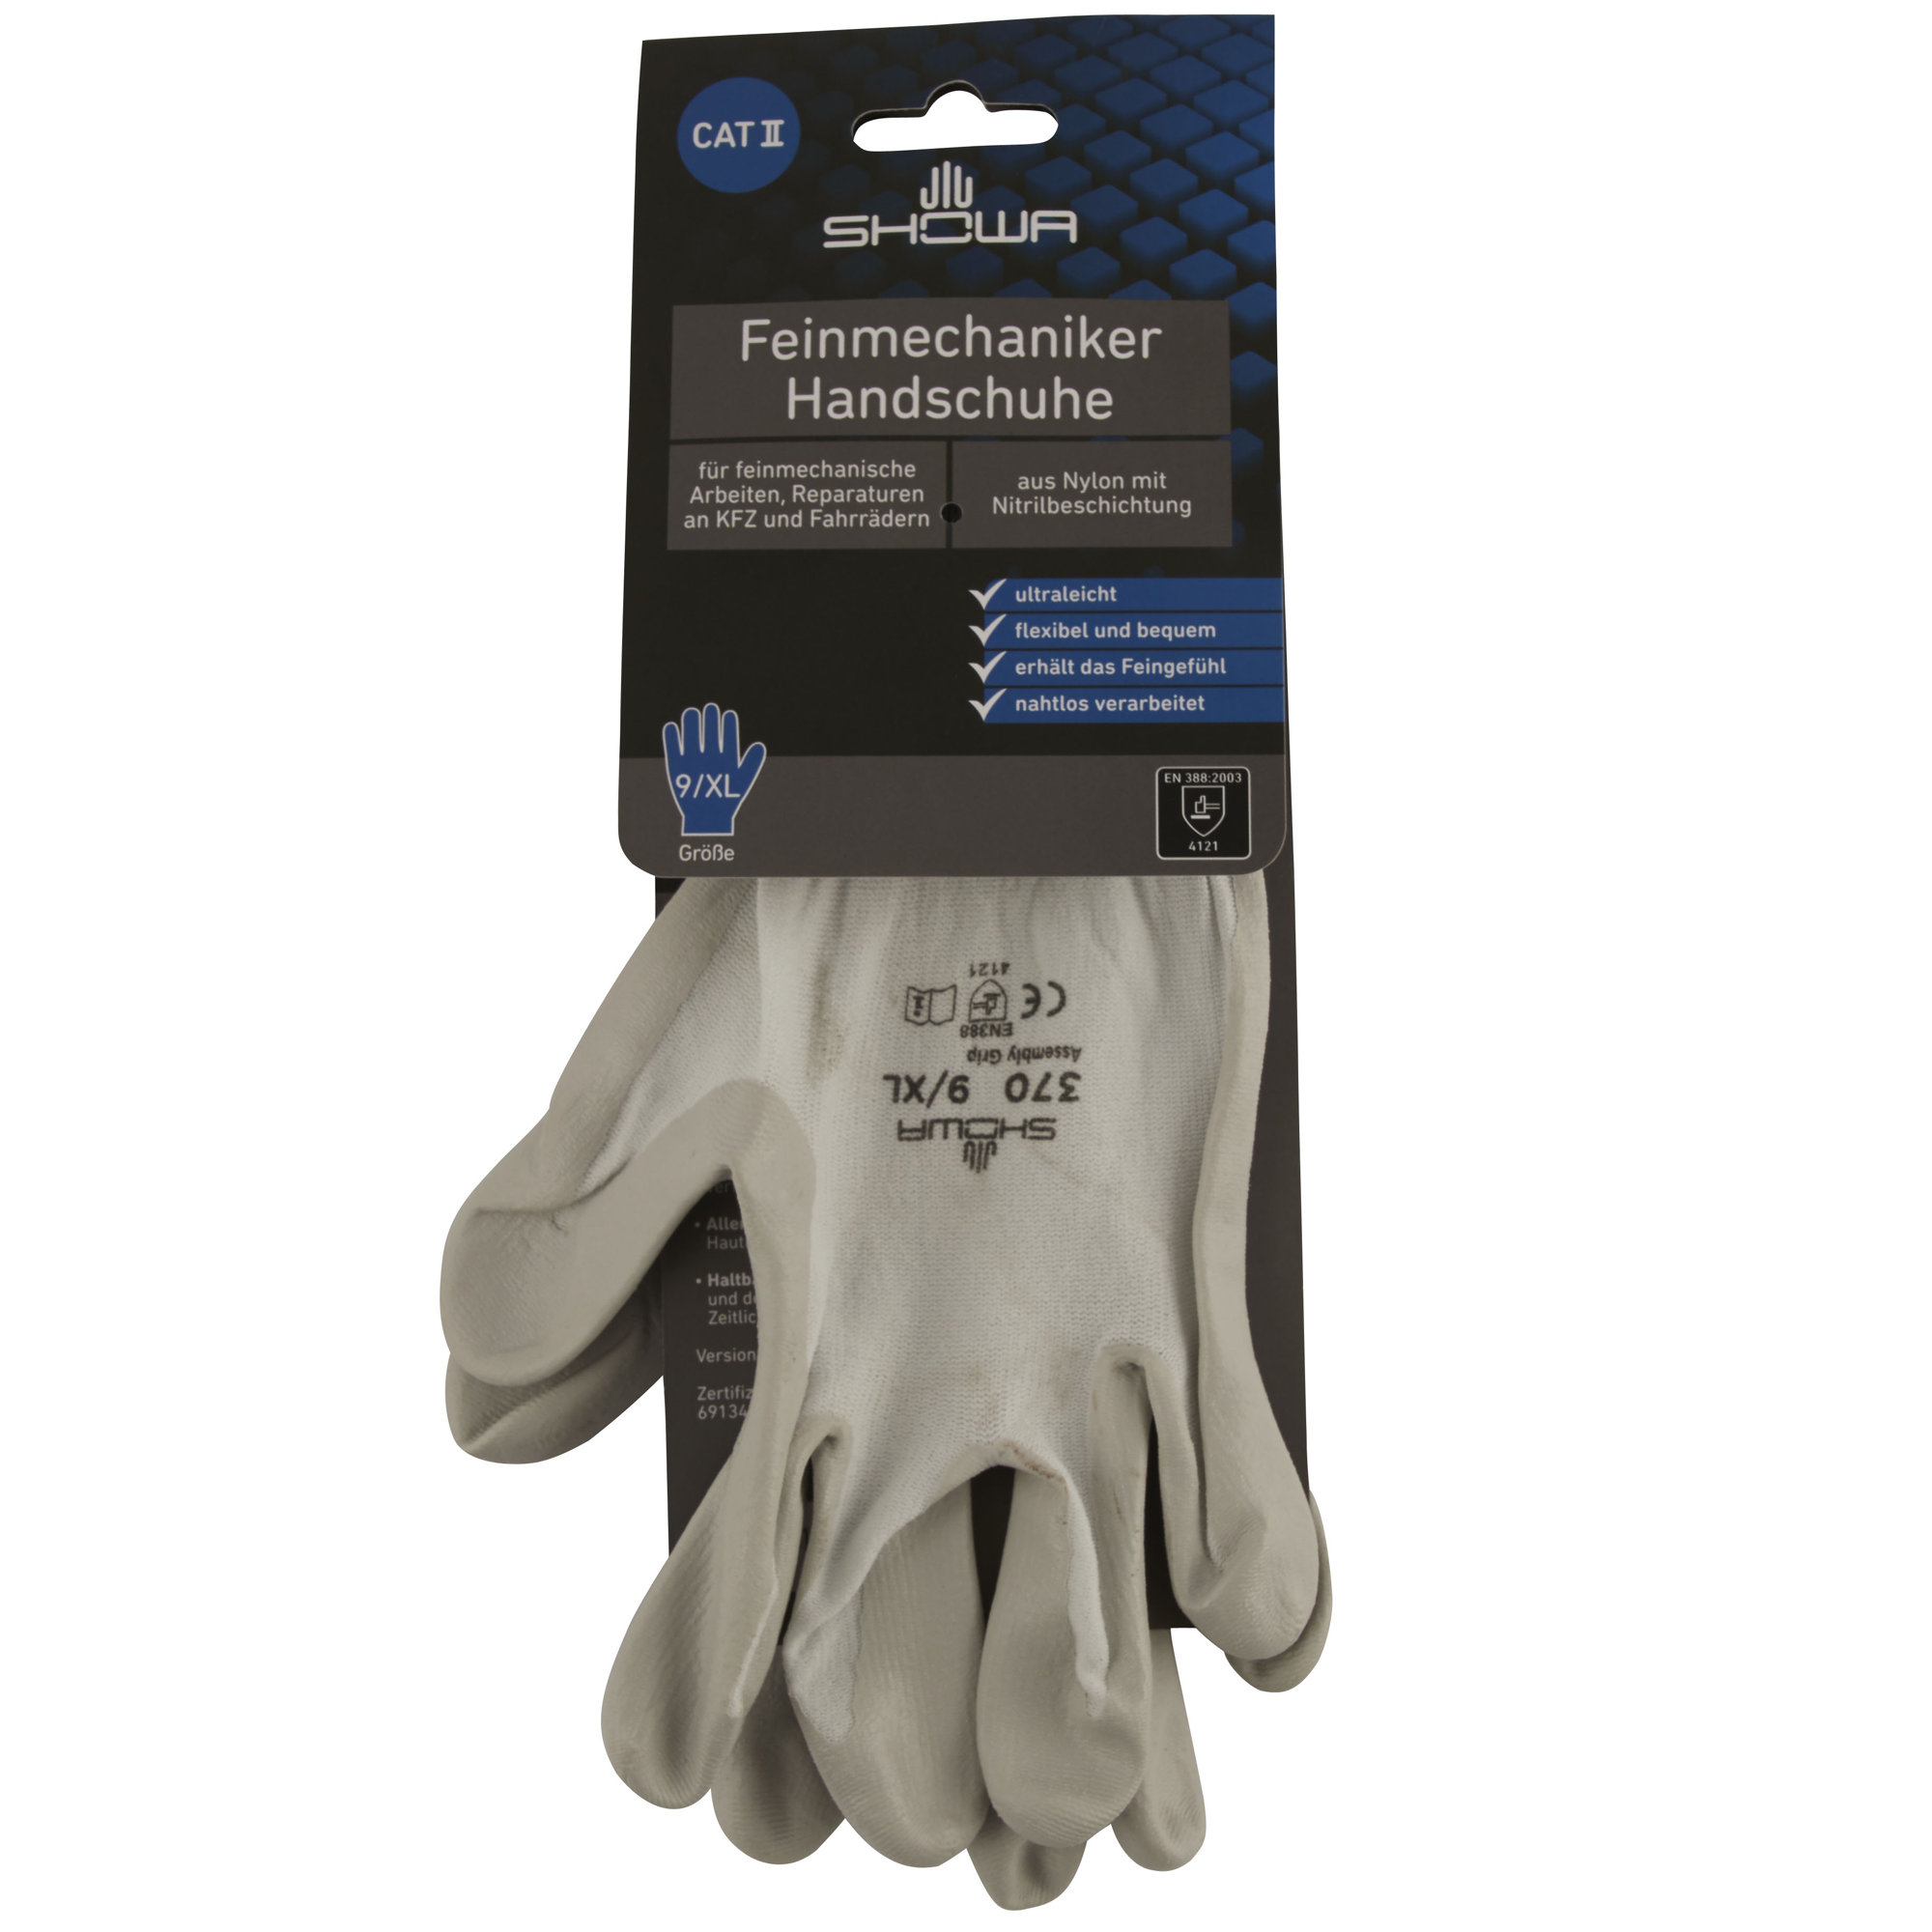 Feinmechaniker Handschuhe Größe 9/XL + product picture